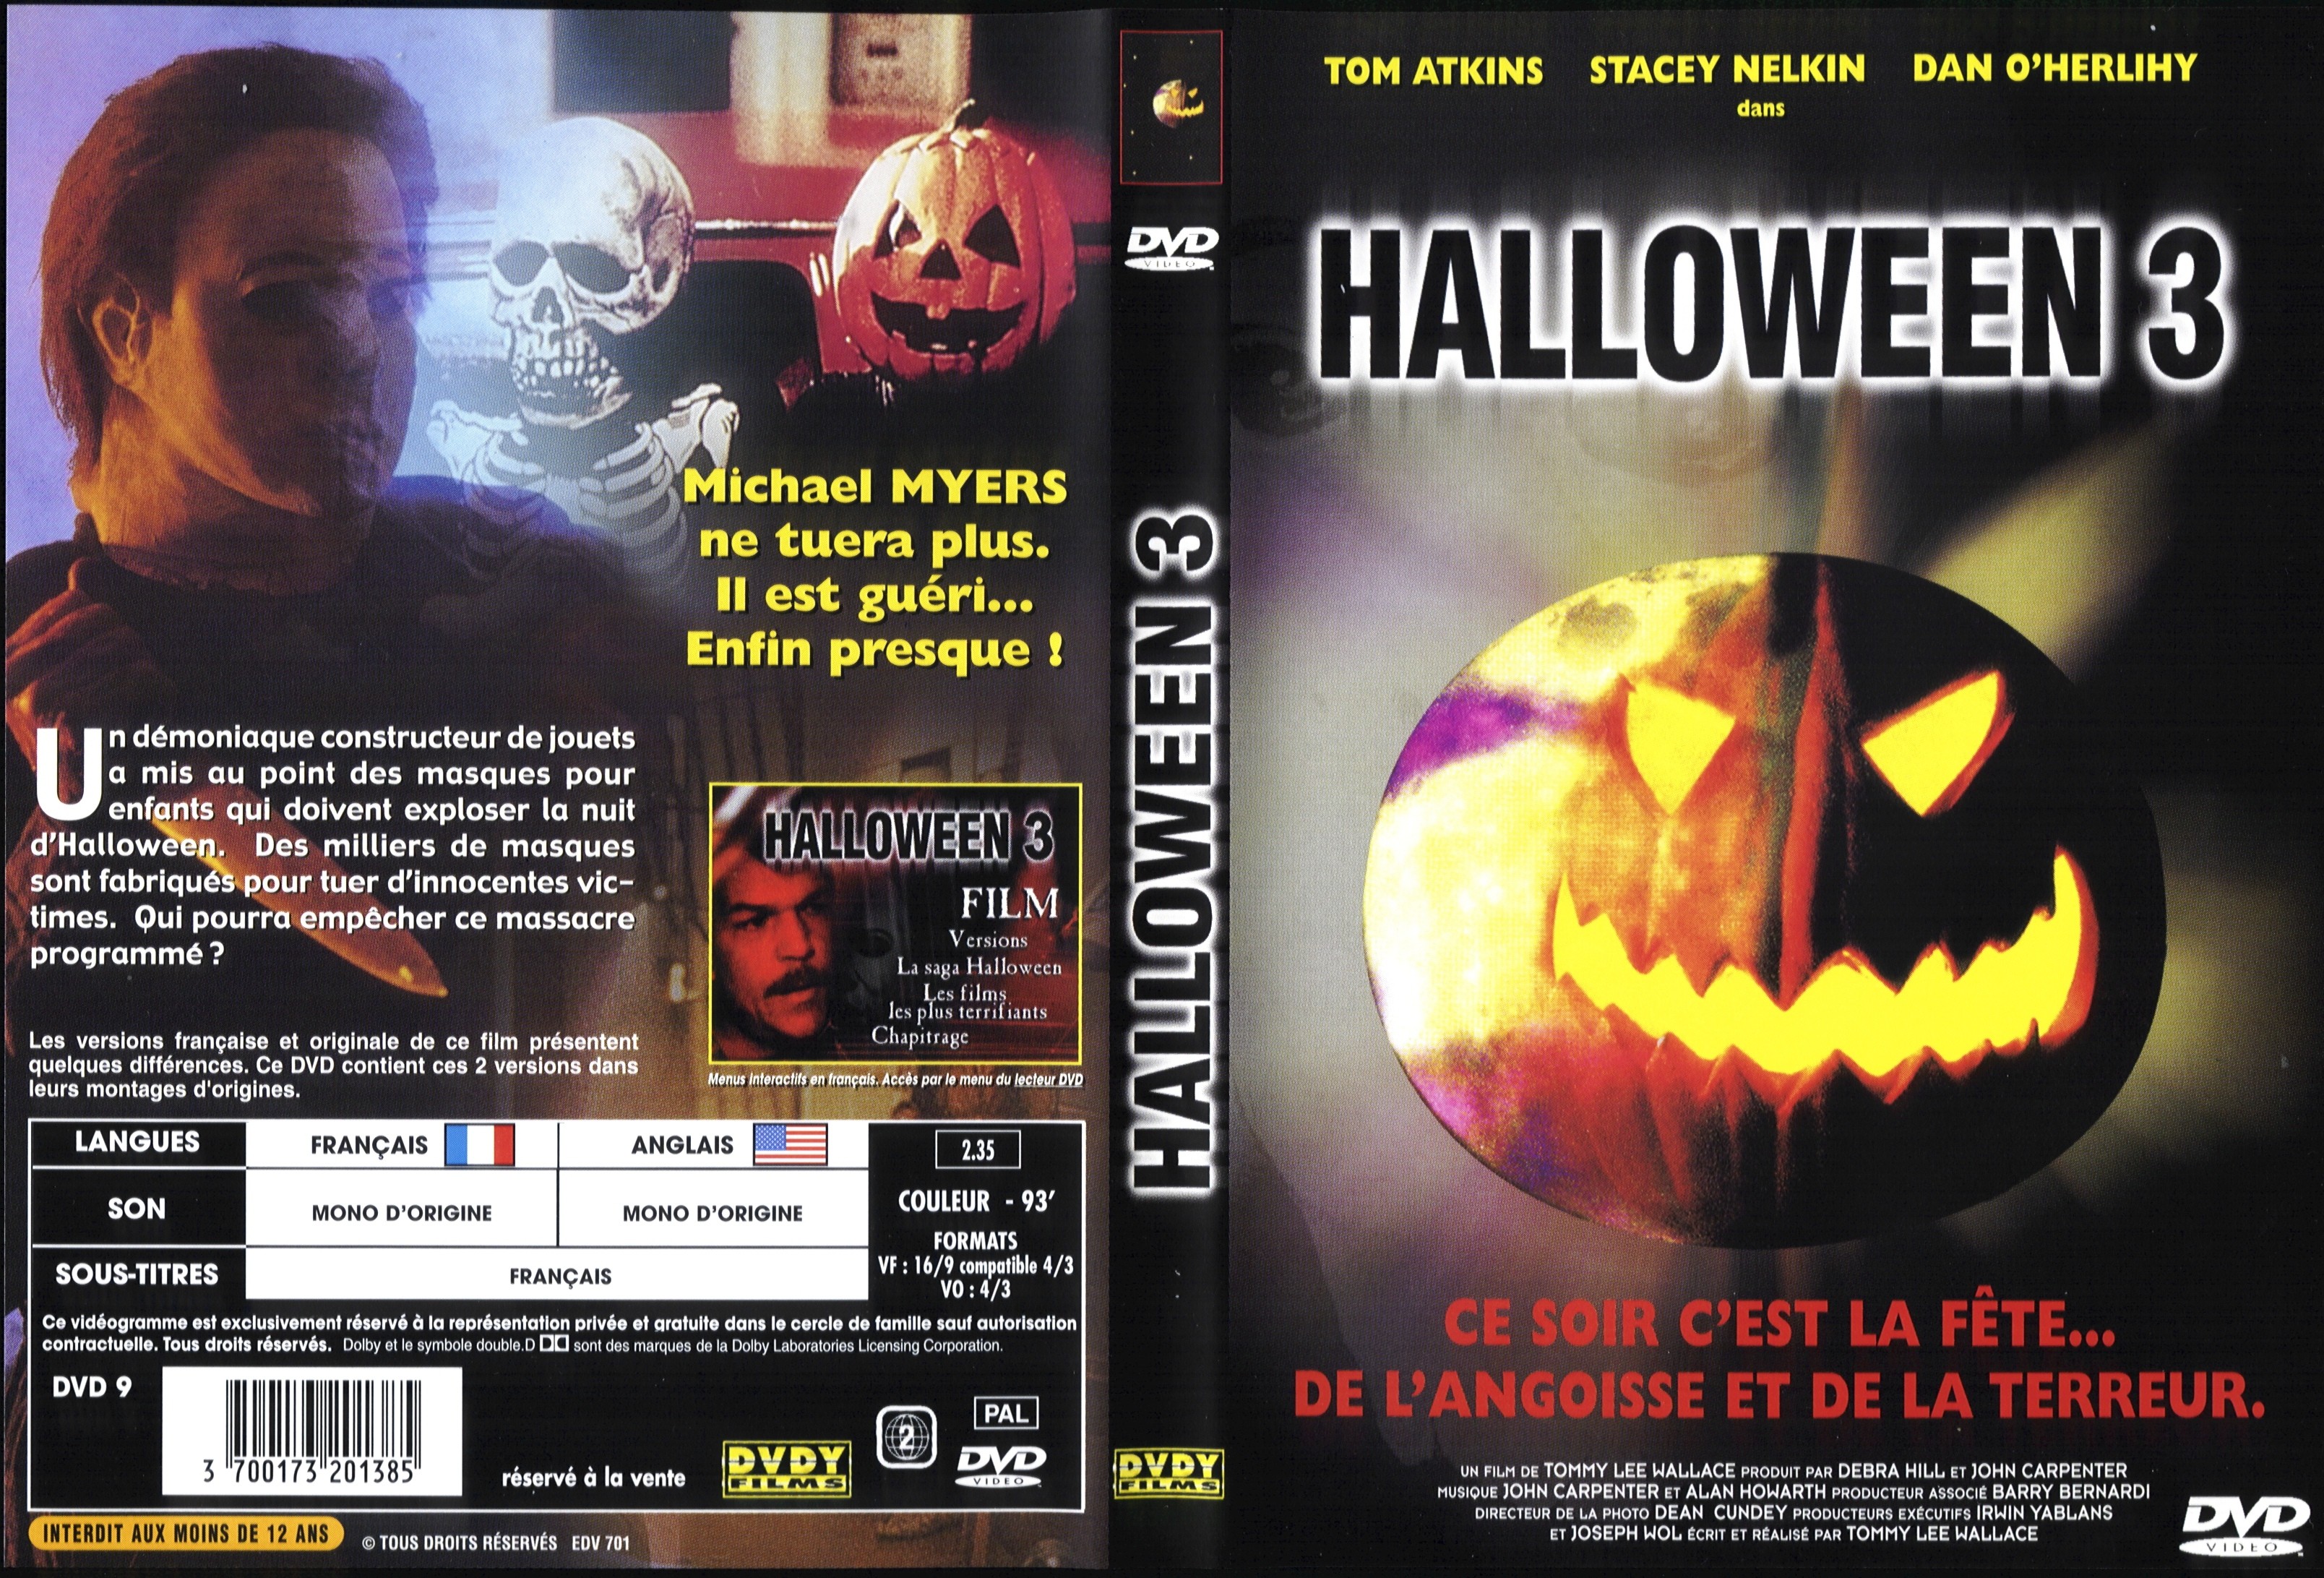 Jaquette DVD Halloween 3 v2